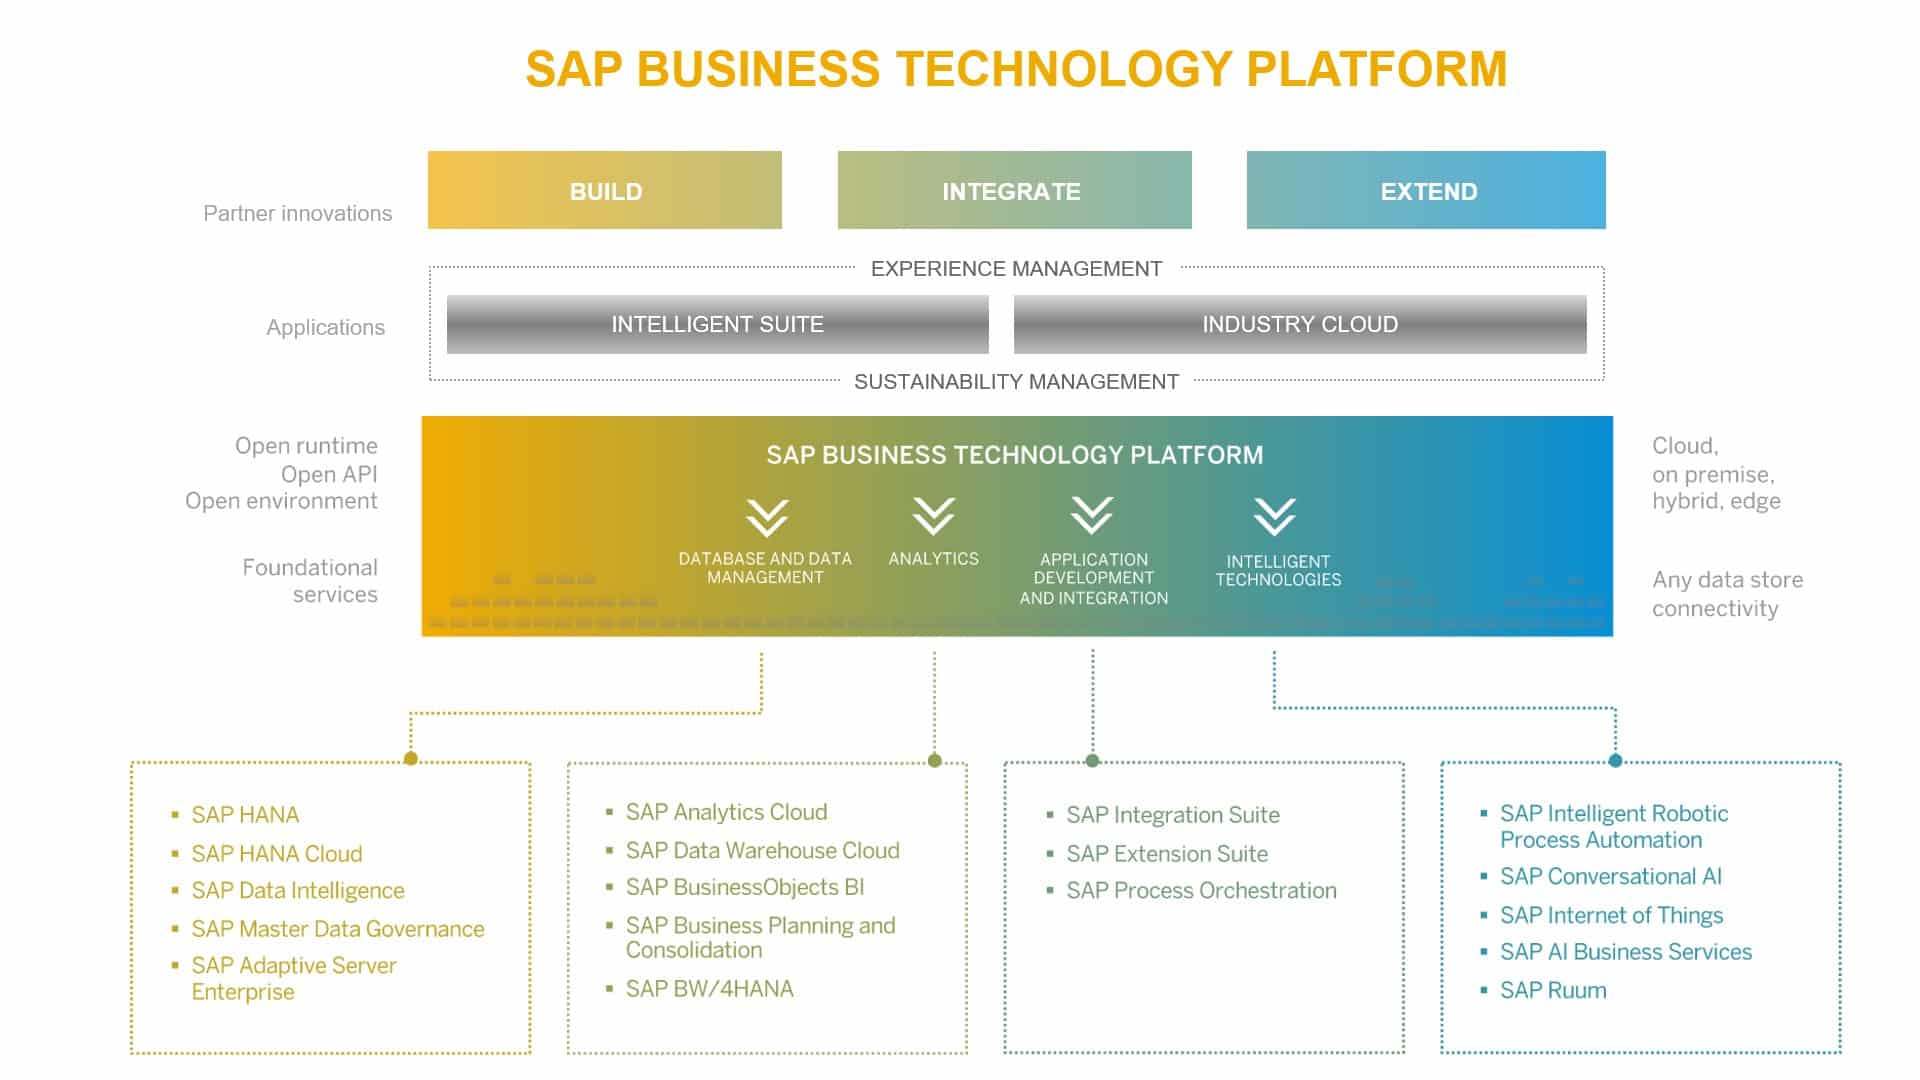 Architecture of SAP Business Technology Platform